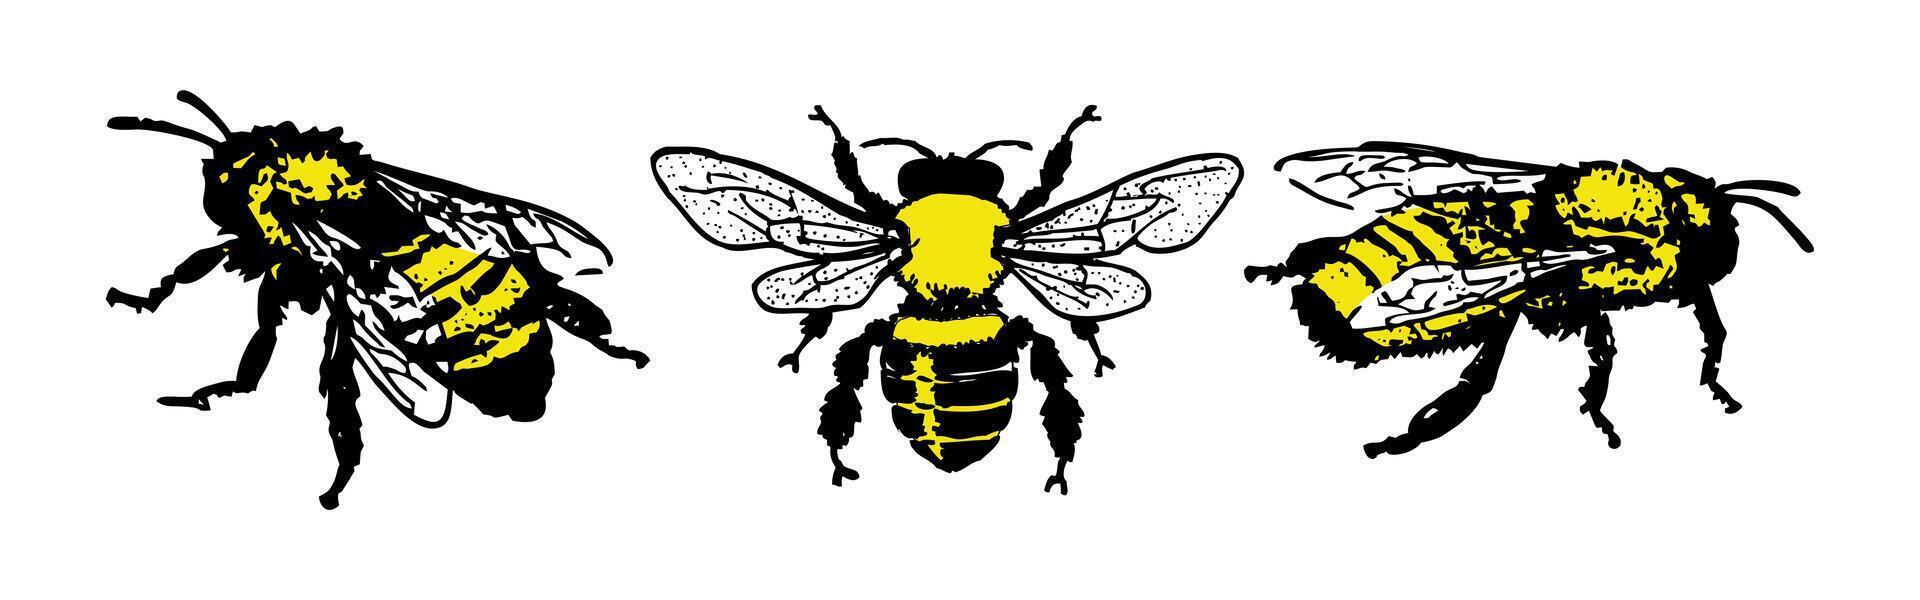 Cheerful Pollinators - Trio of Playful Bee Illustrations. Bee illustration sets. vector